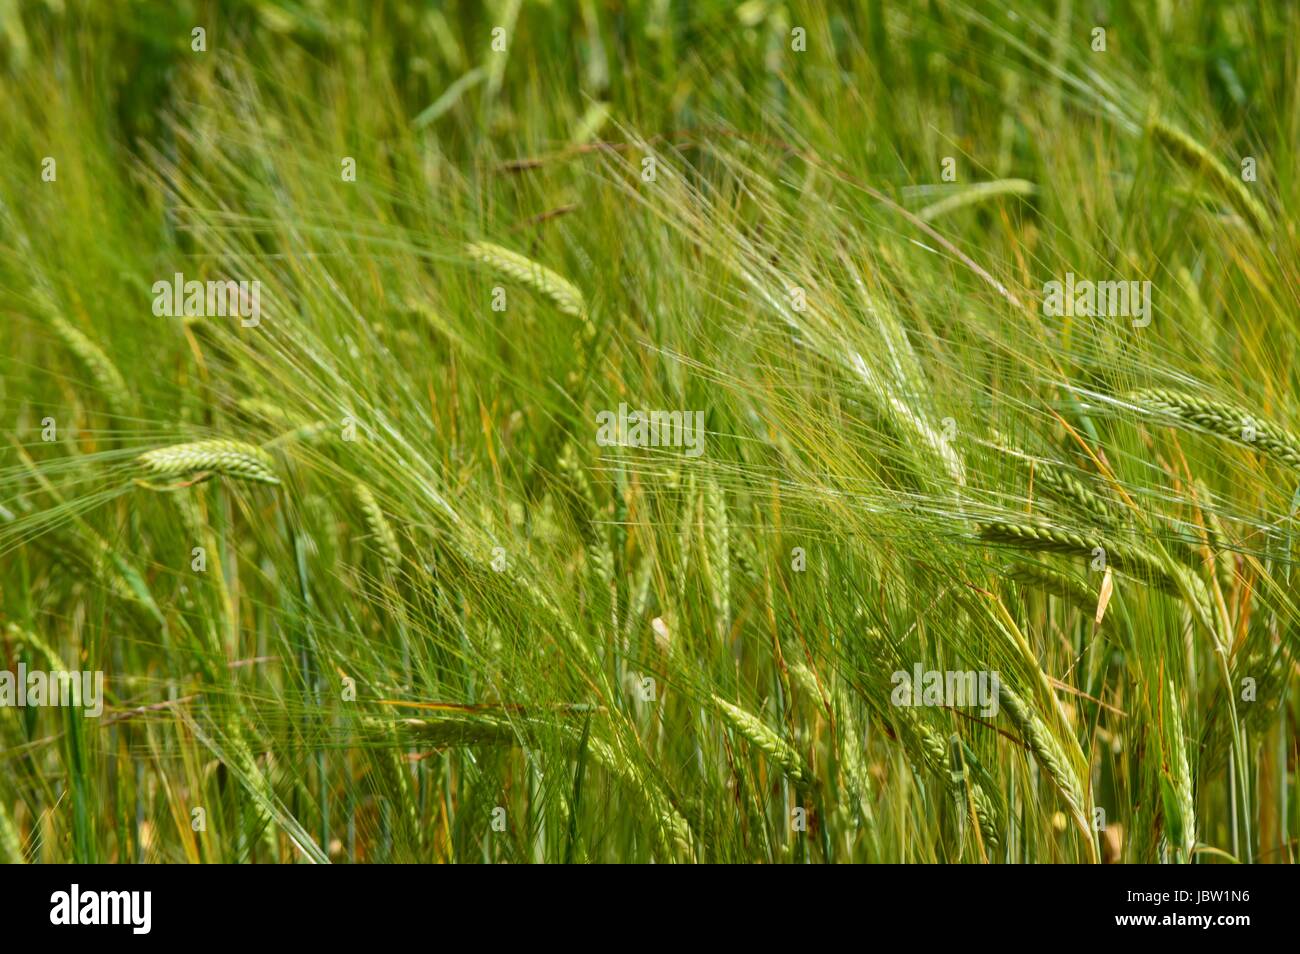 barley field beard Stock Photo